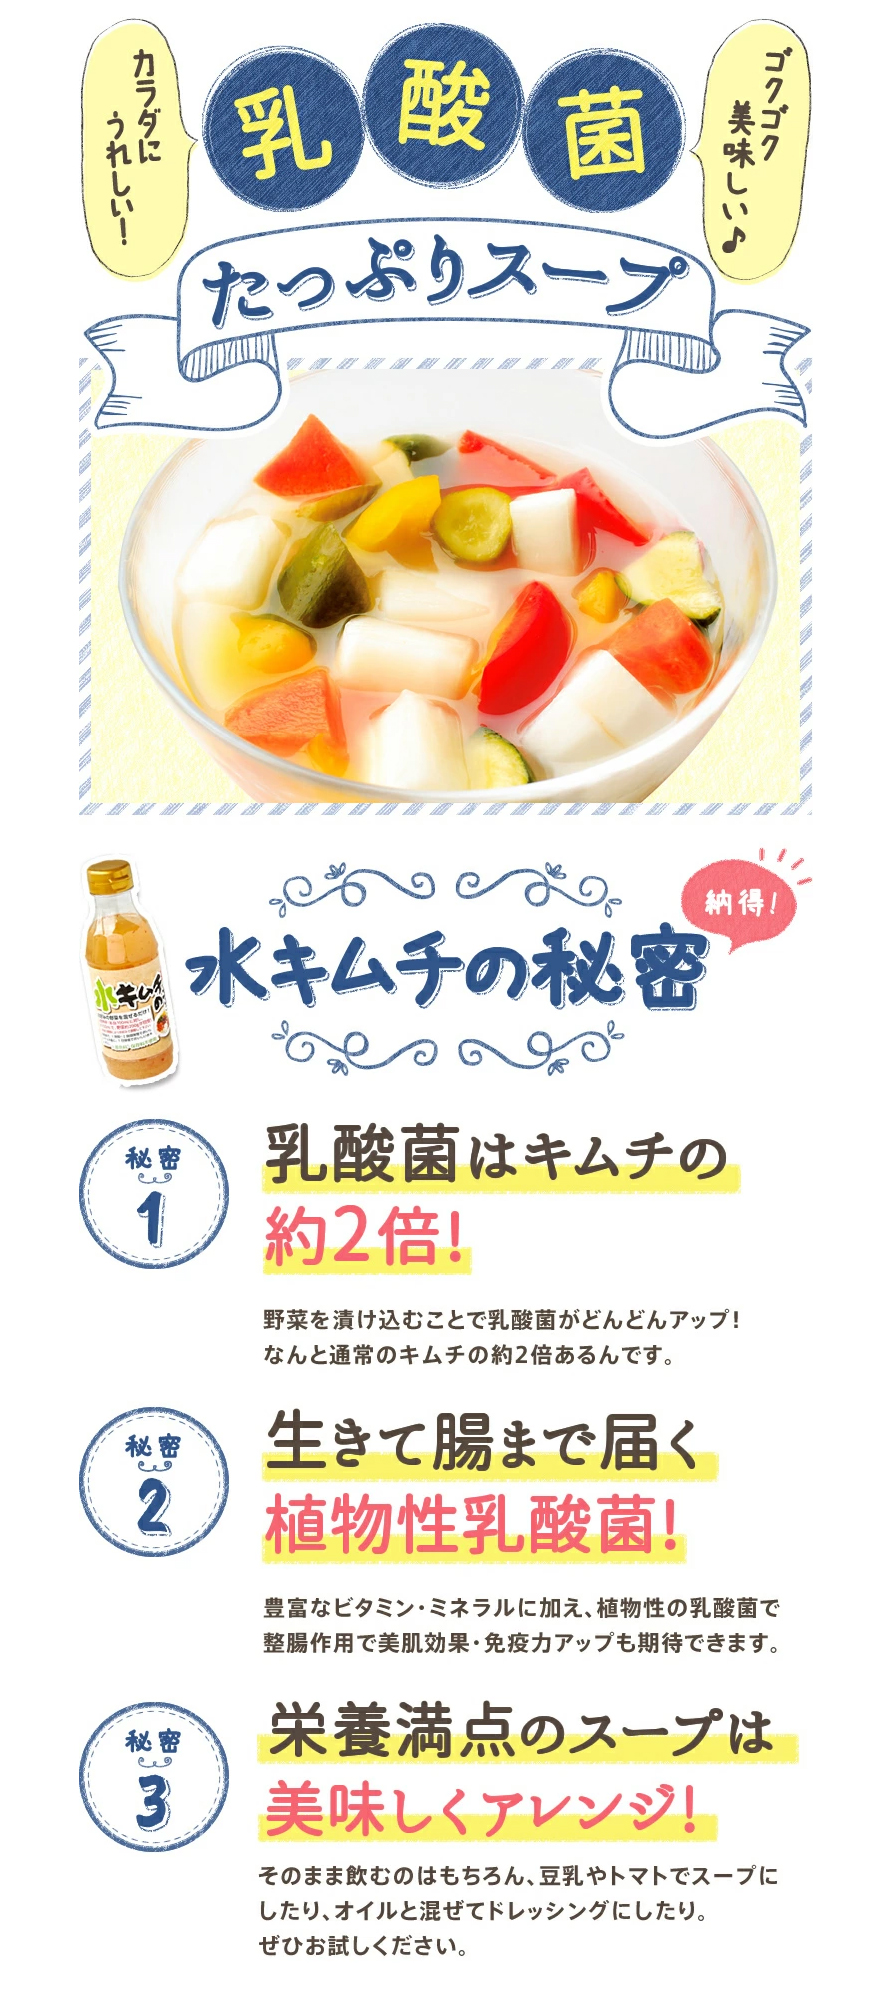 TOKUYAMA] 水キムチの素 300ml/韓国料理の素 調味料 韓国食品 3257 韓国市場  